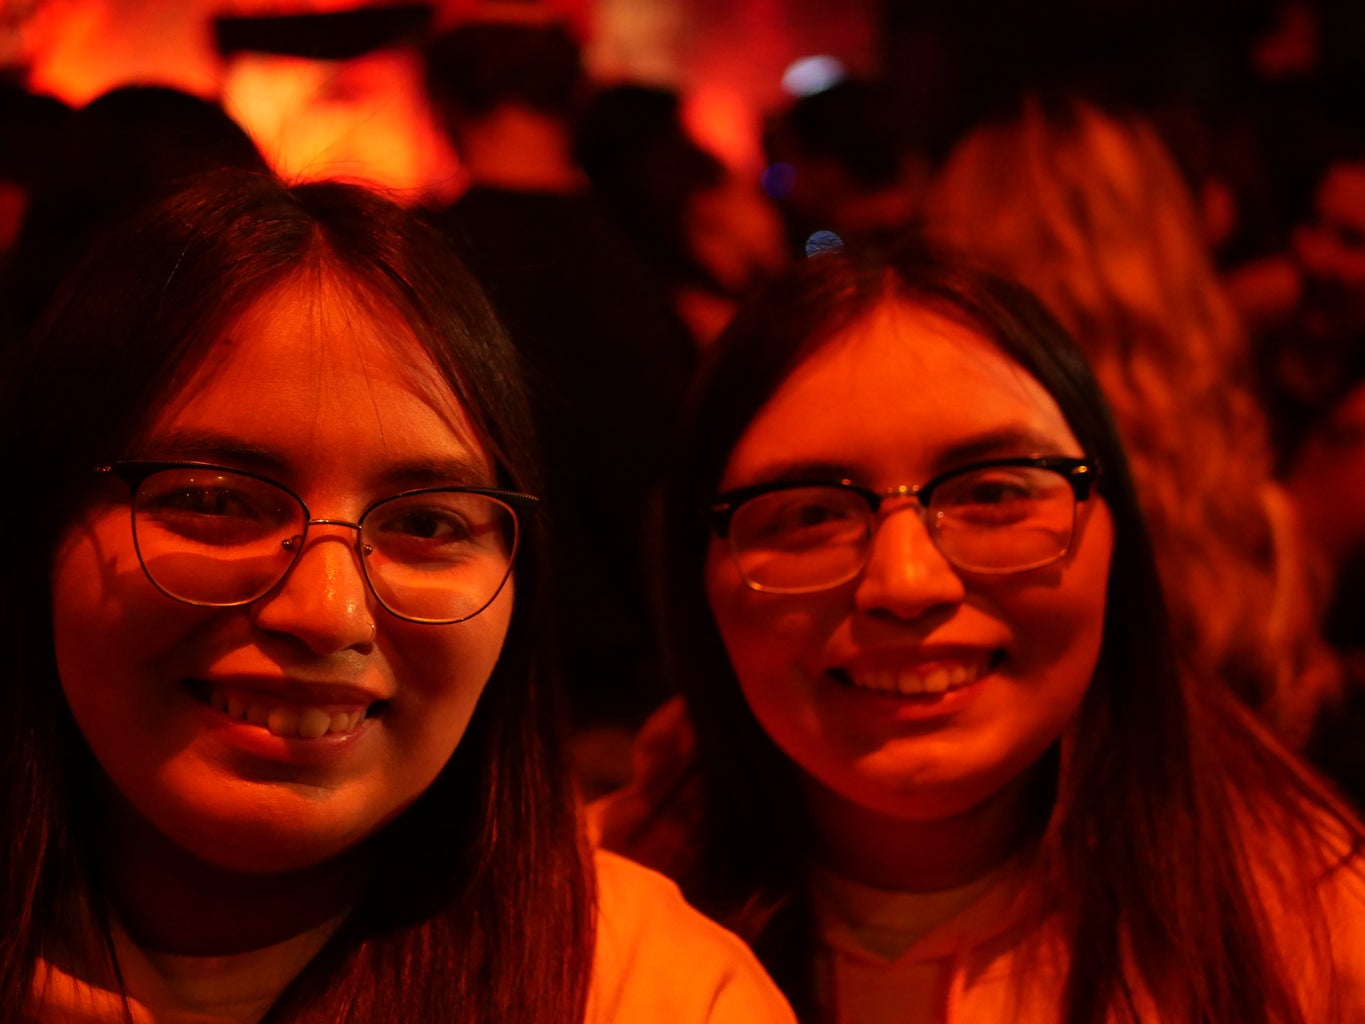 two girls smiling under red lighting